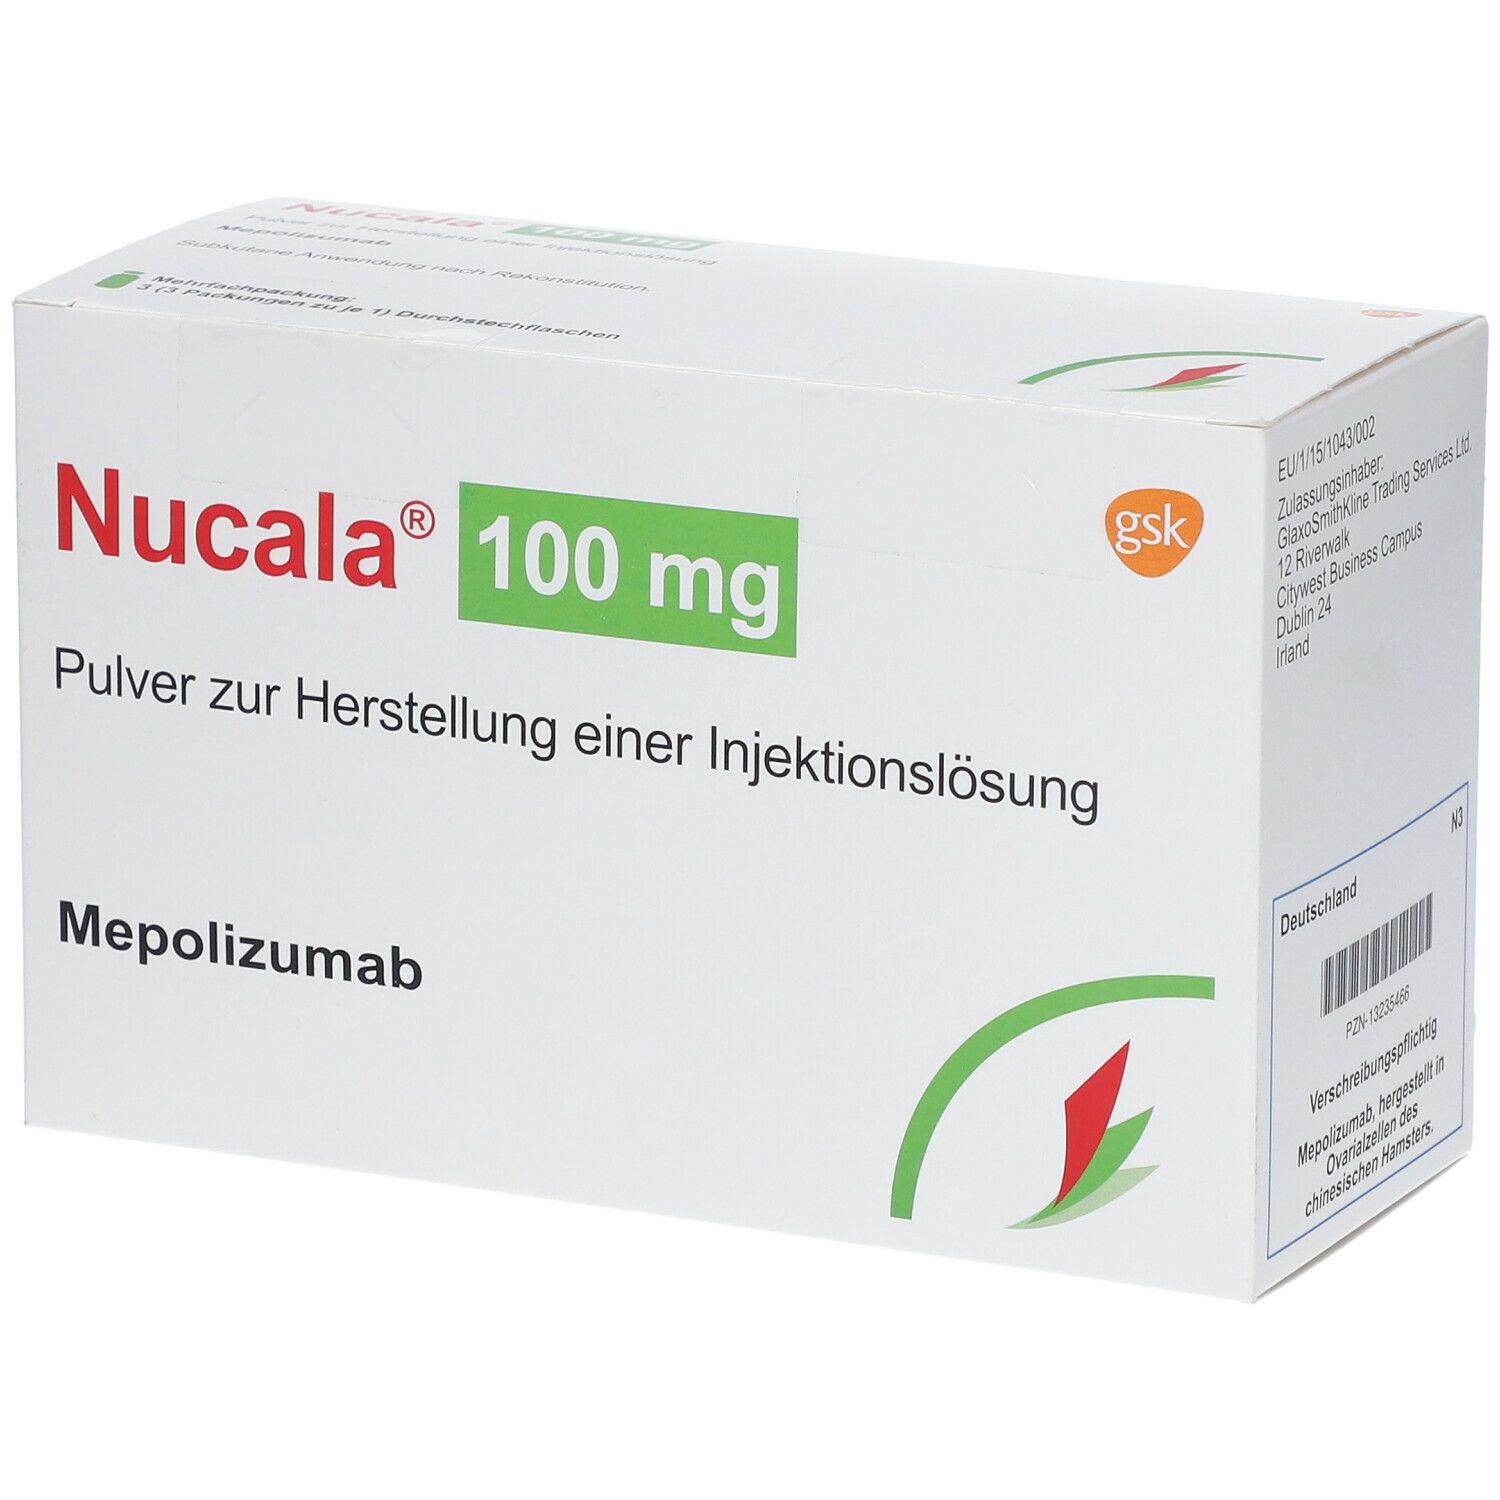 Nucala® 100 mg